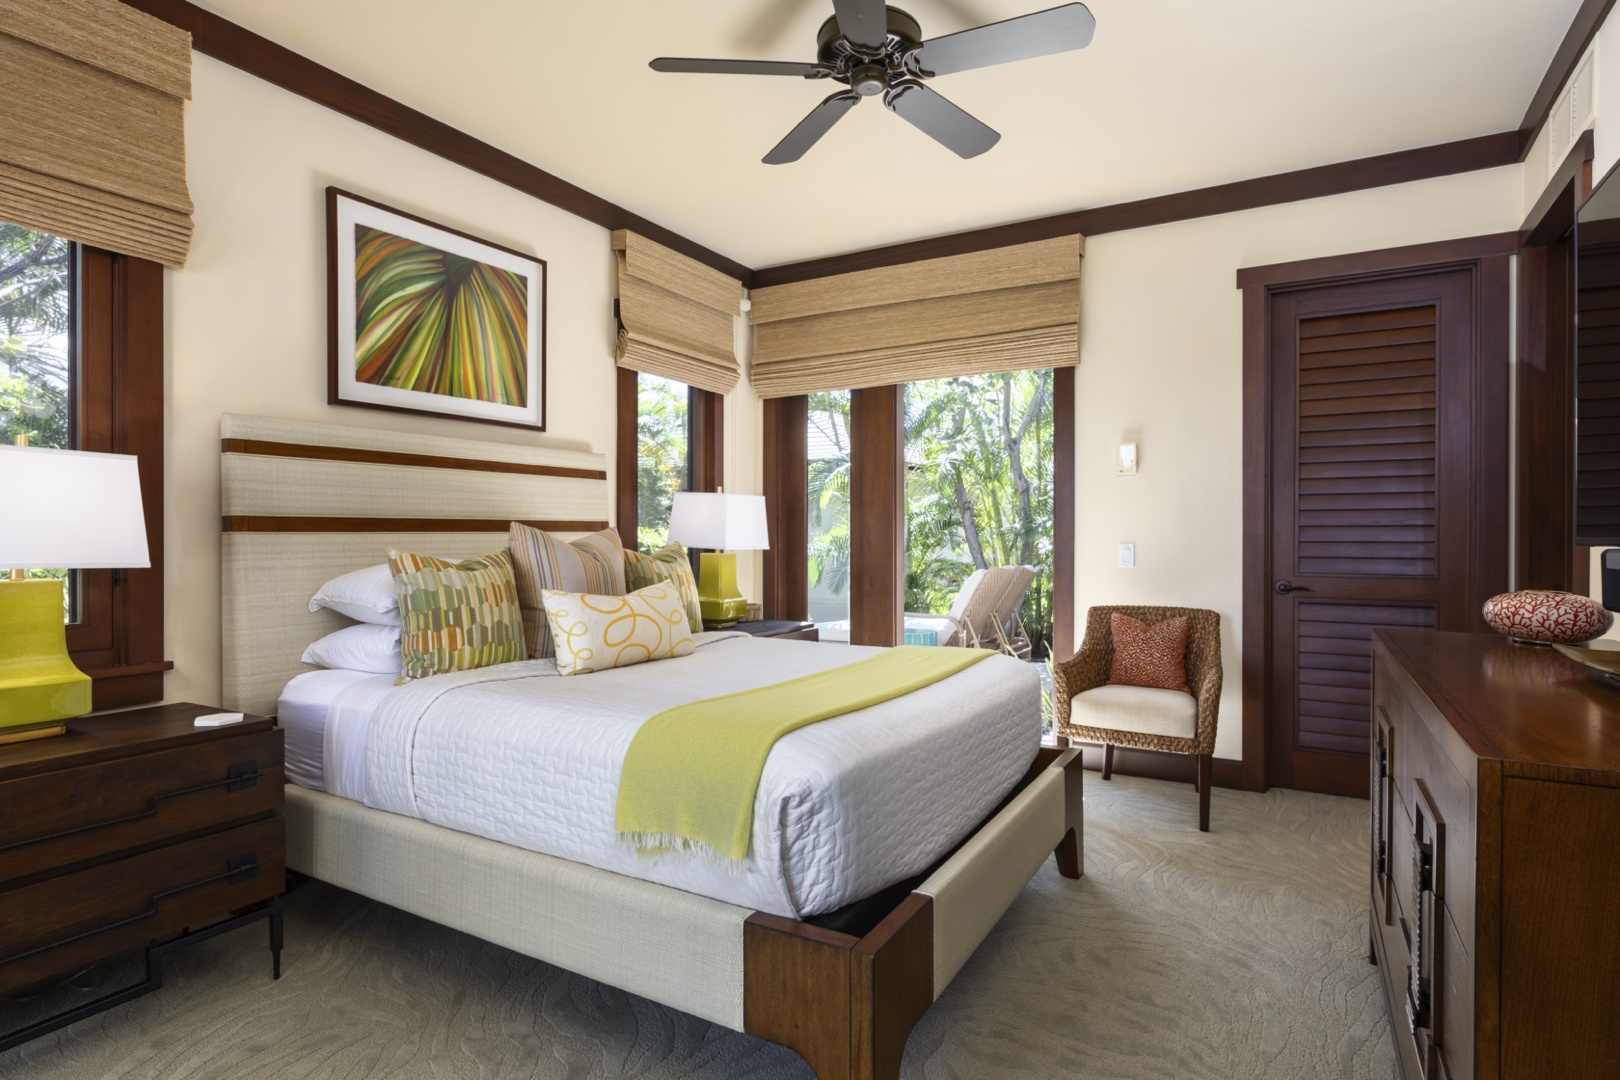 Kailua Kona Vacation Rentals, 3BD Hali'ipua Villa (108) at Four Seasons Resort at Hualalai - Alternate view of the elegantly furnished Third Bedroom